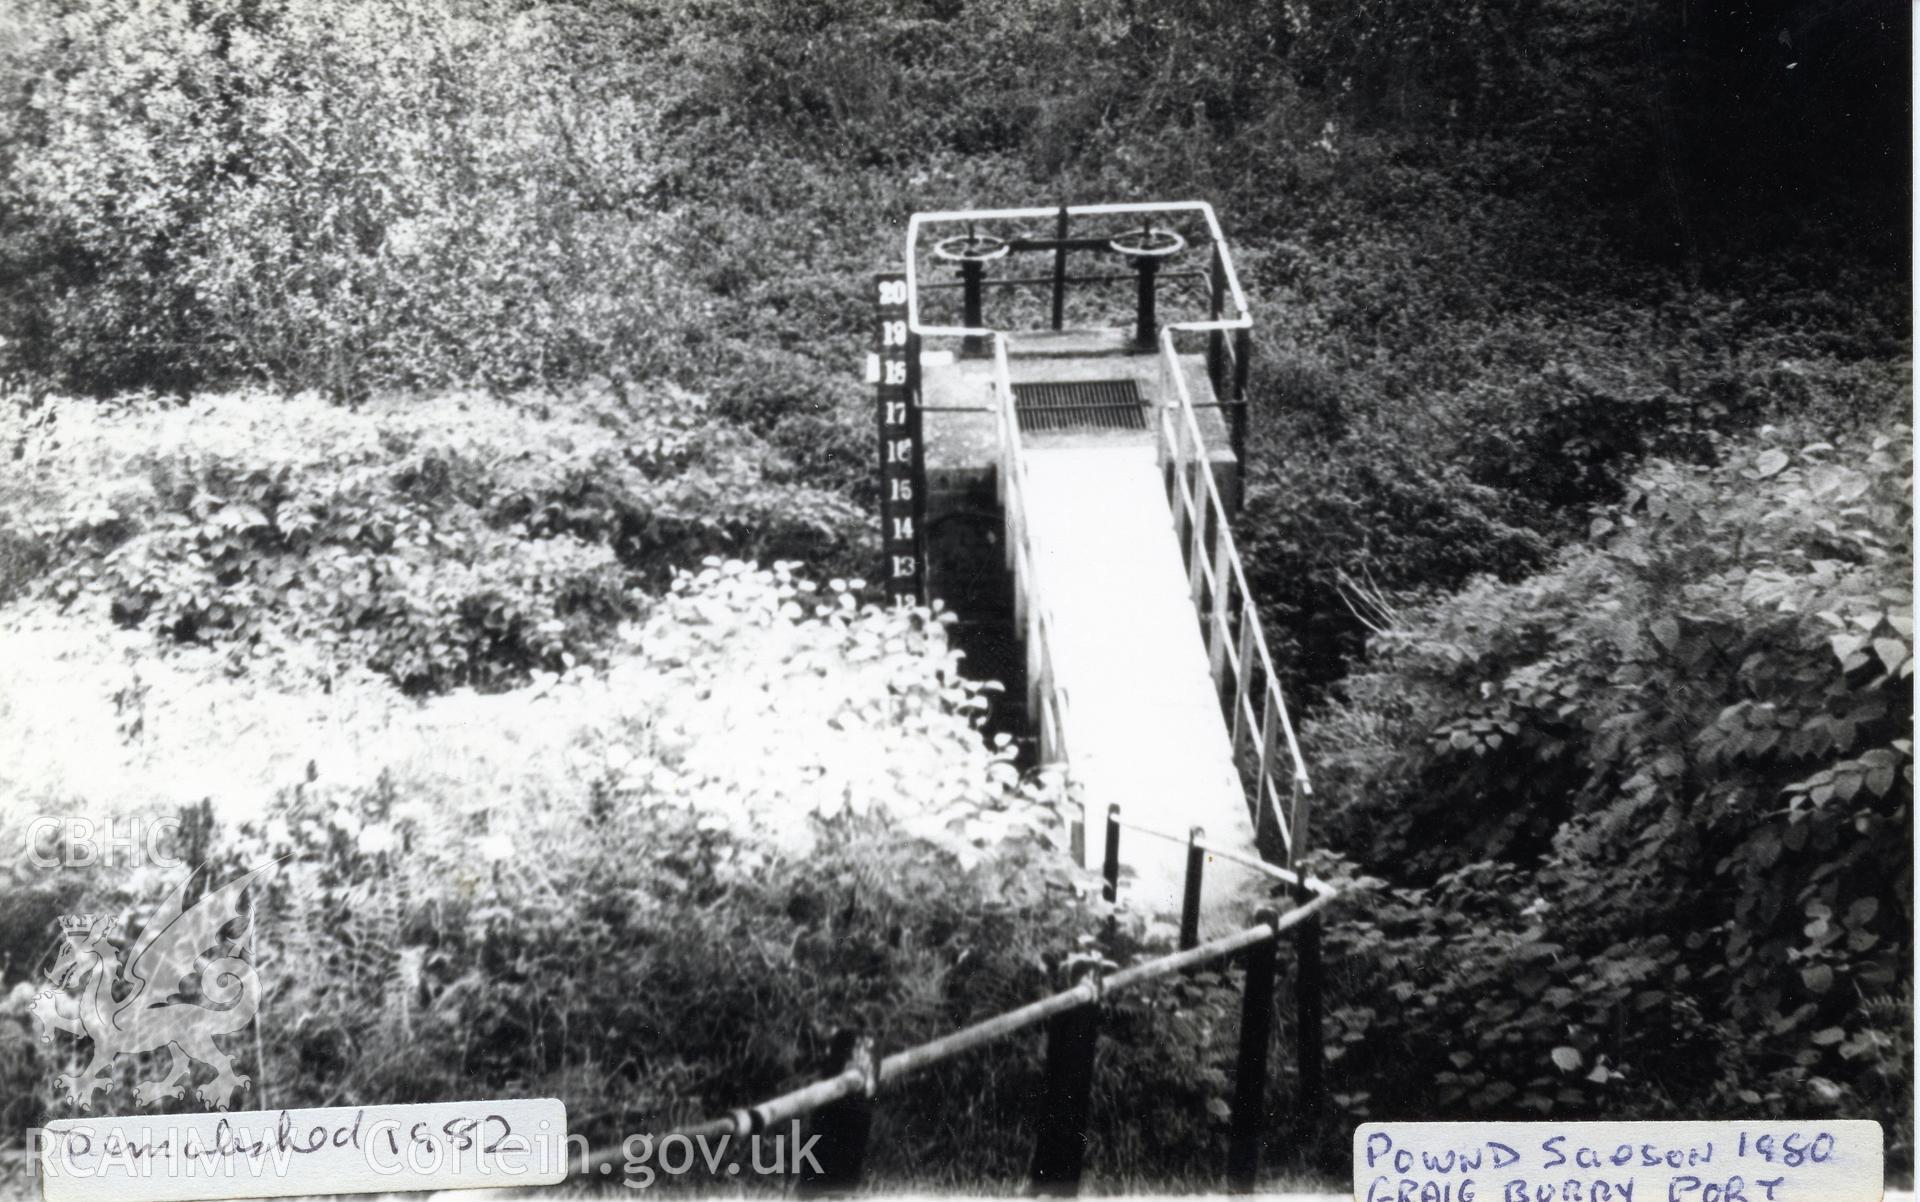 Digital photograph showing Pound Saeson, Graig, Burry Port, dated 1980.